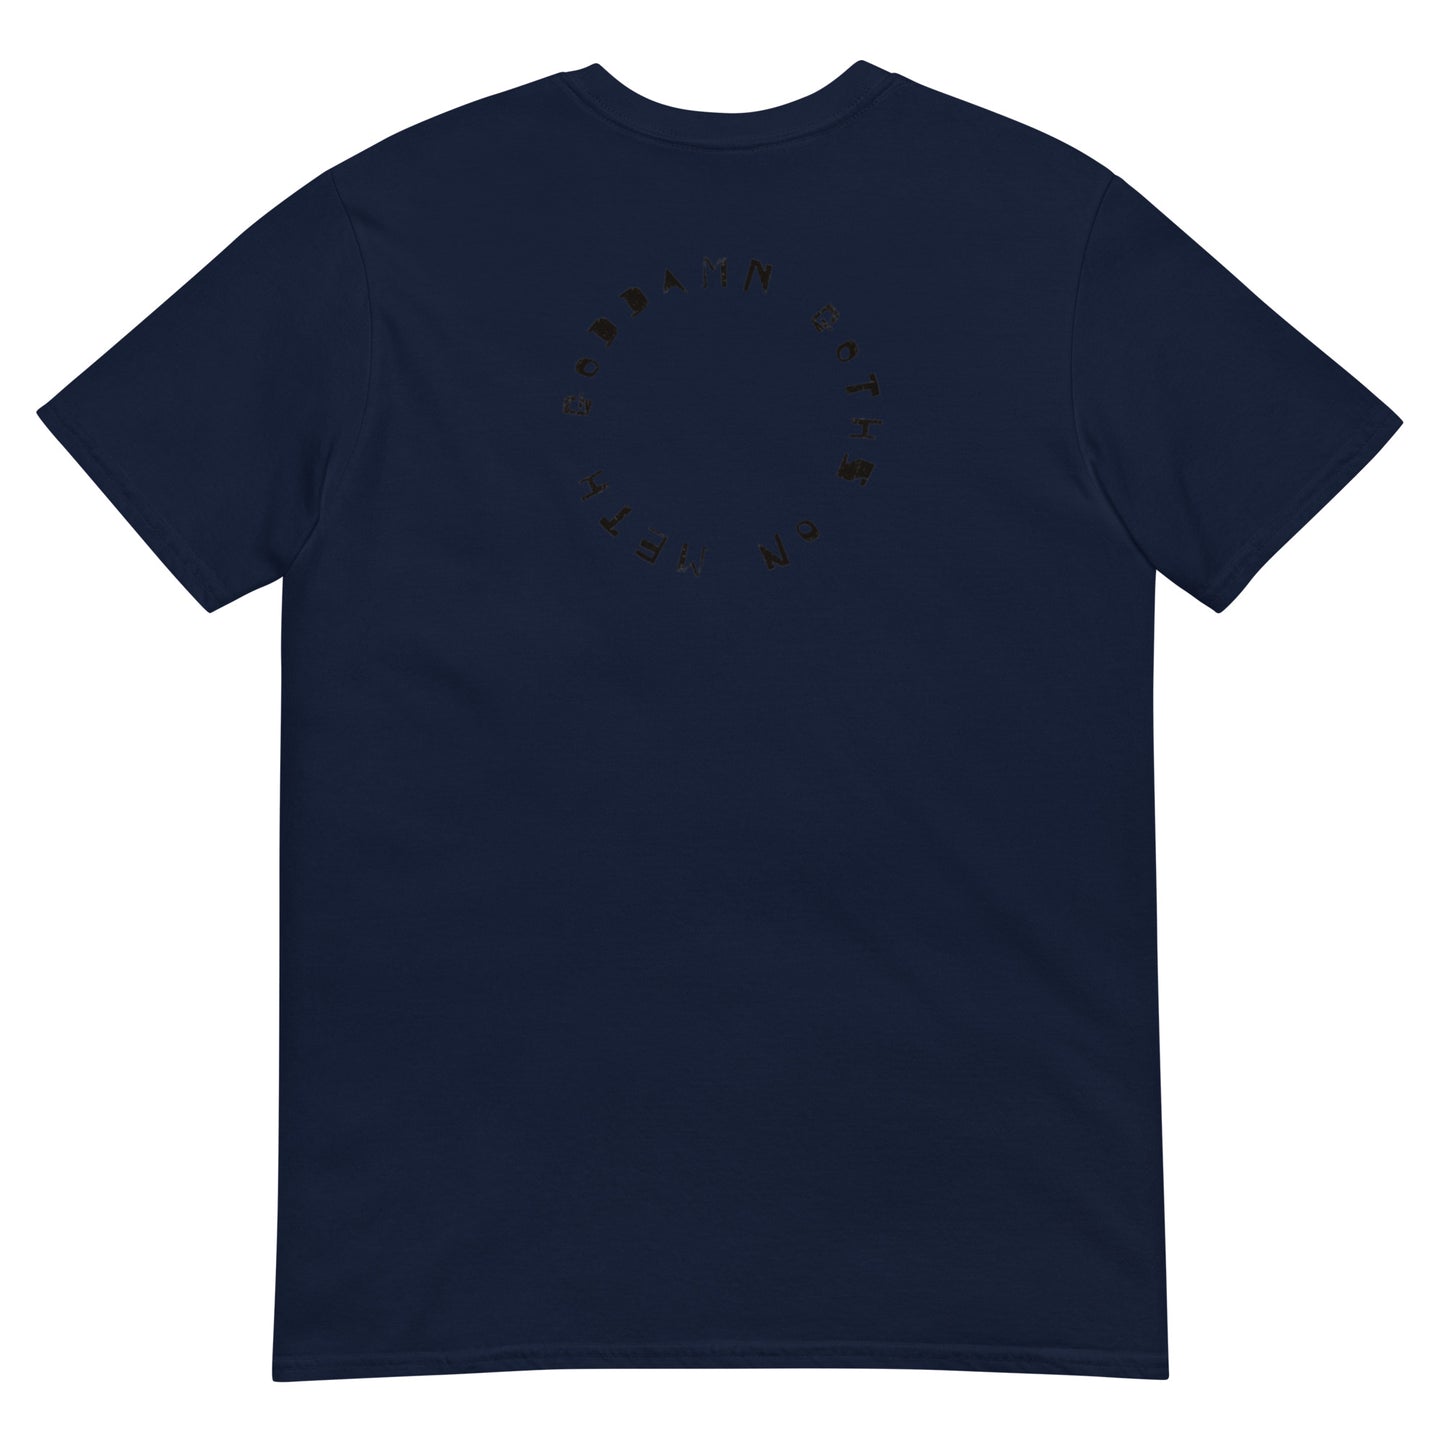 ODE TO MR. COKEWOLD - Short-Sleeve Unisex T-Shirt